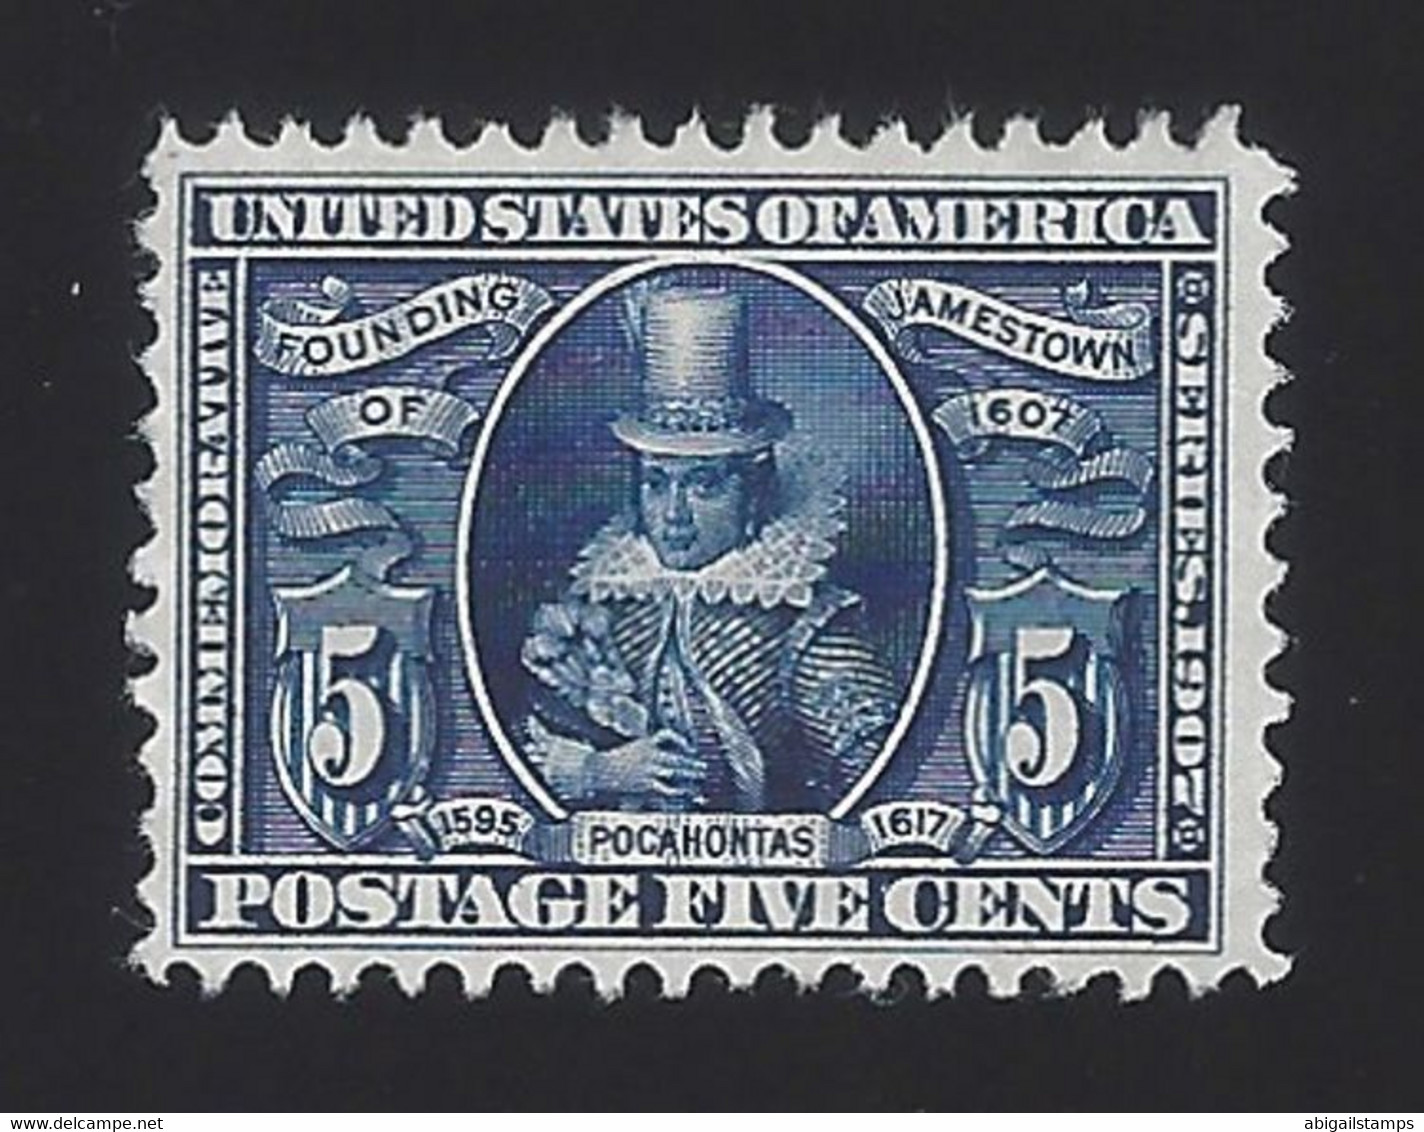 US #330 1907 Blue Wmk 191 Perf 12 Mint NG F-VF Scv $125 - Unused Stamps